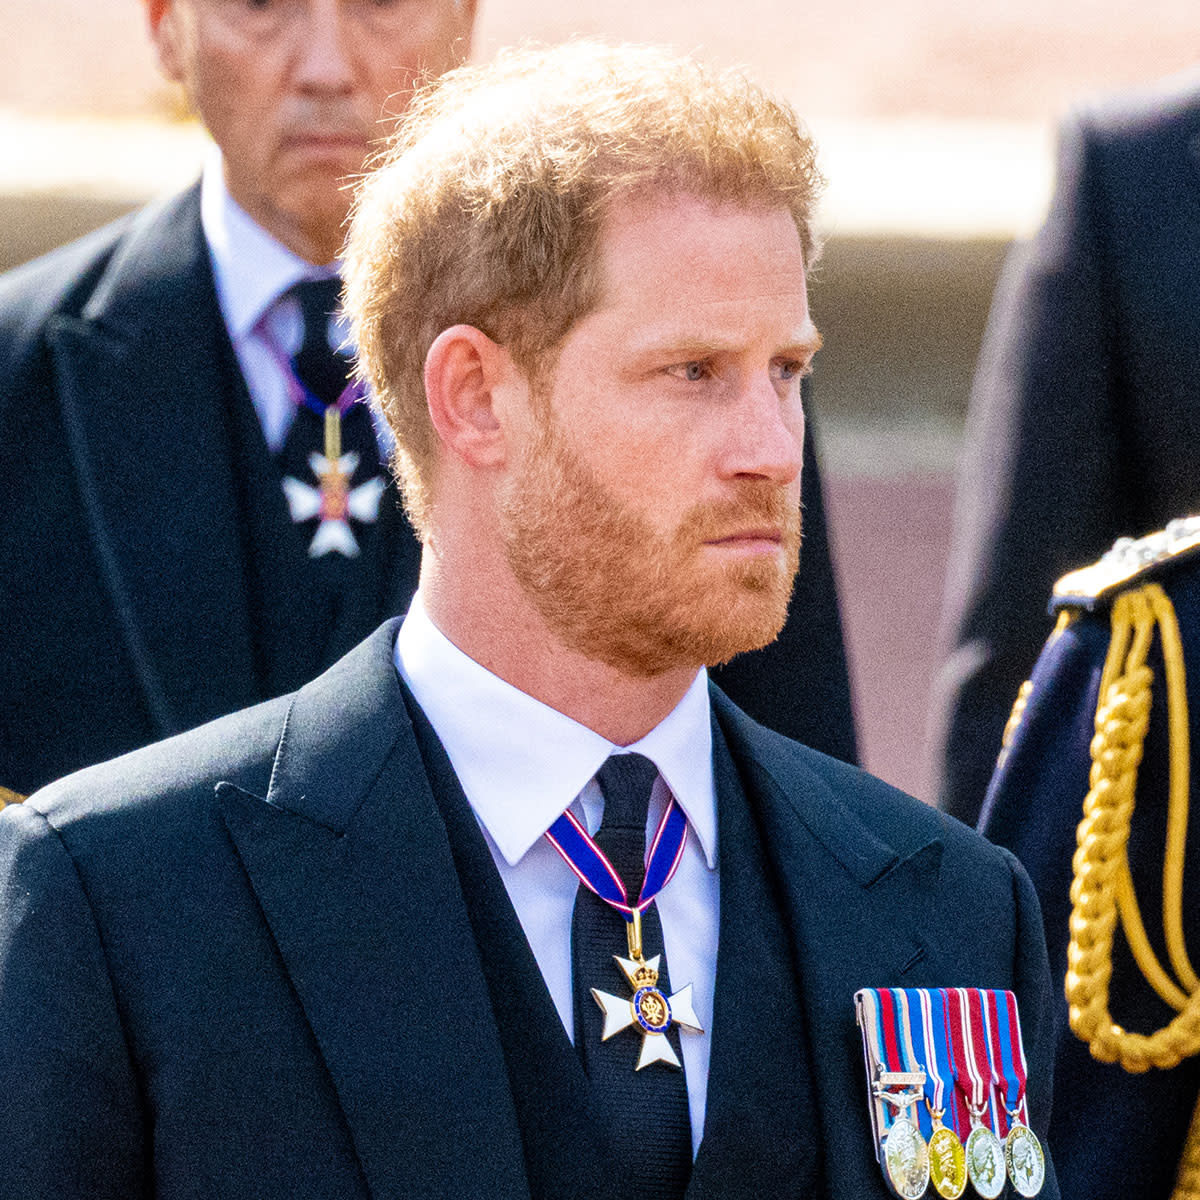 Prince Harry attends Queen Elizabeth's funeral